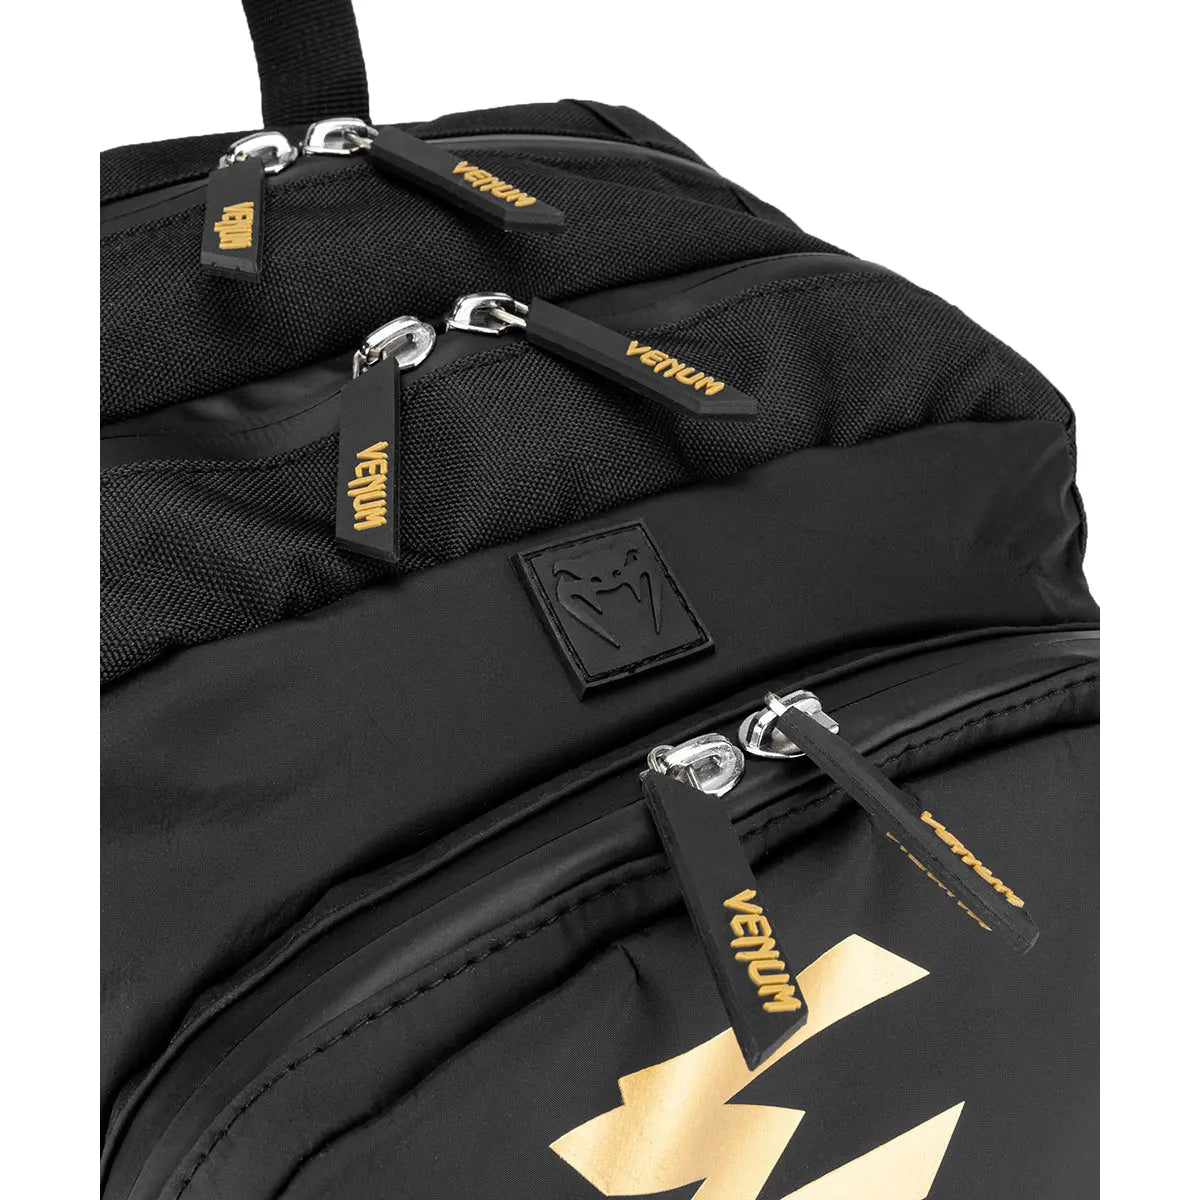 Venum Challenger Pro EVO Backpack Venum